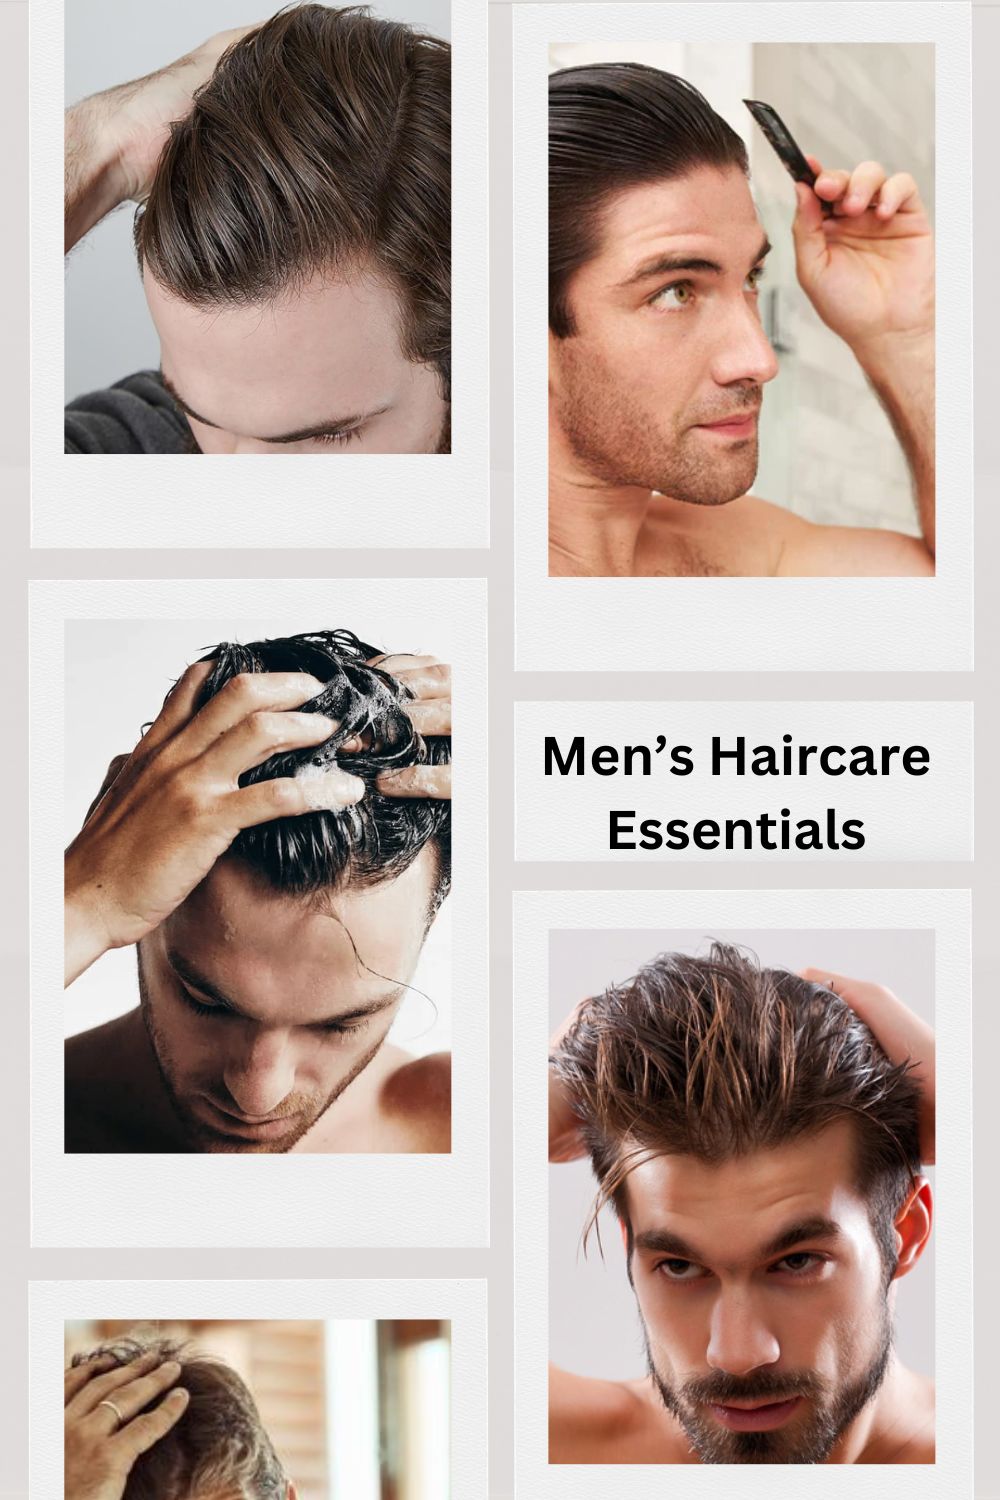 Men’s Haircare Essentials